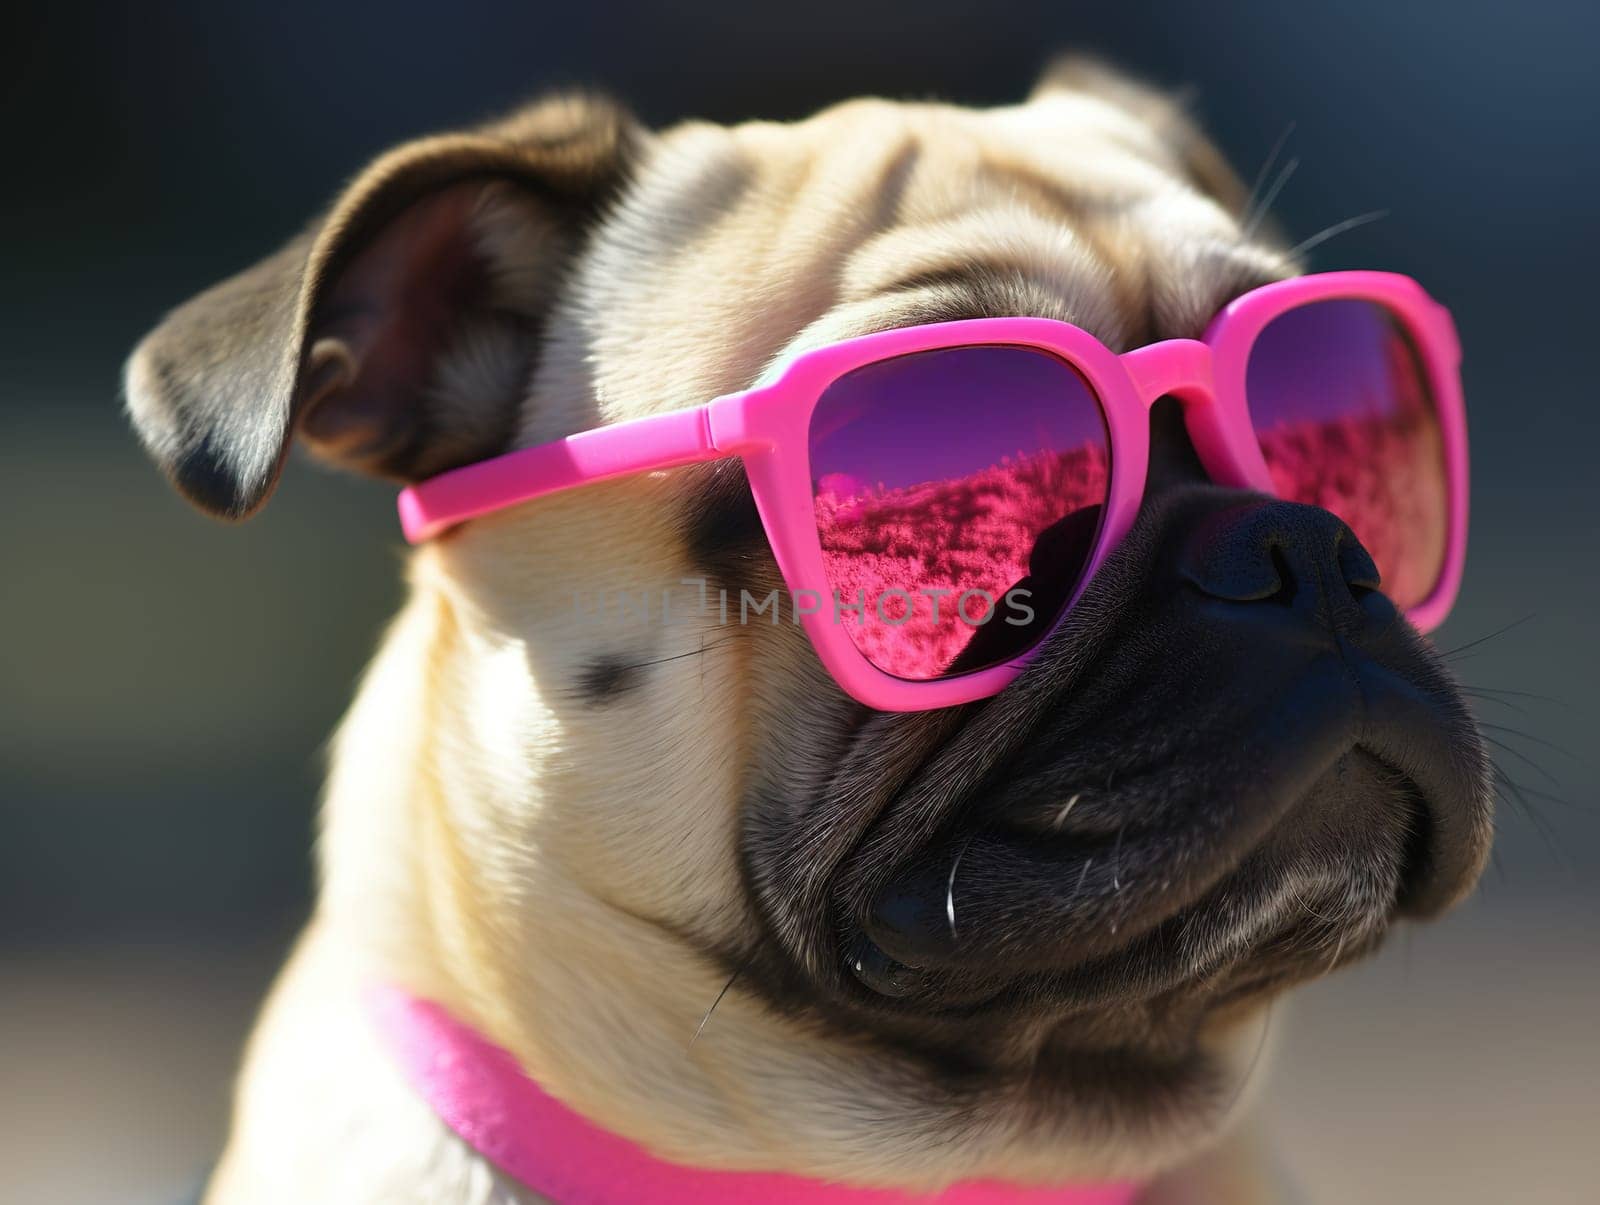 Cute Funny Dog Pug Breed In Pink Sunglasses by tan4ikk1